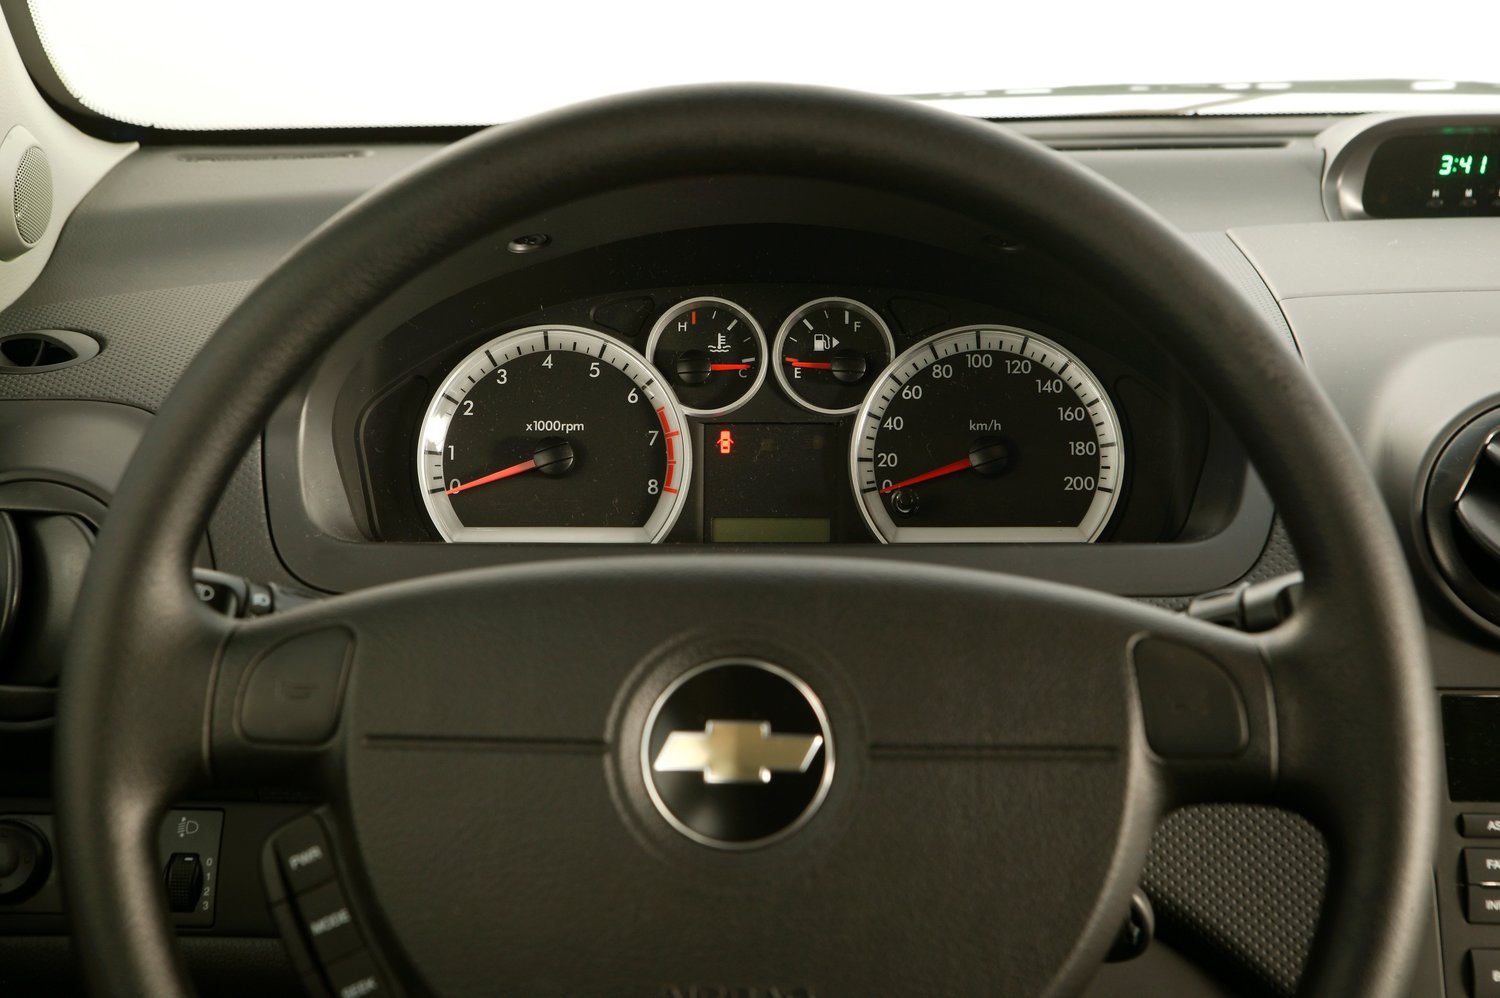 хэтчбек 3 дв. Chevrolet Aveo 2006 - 2012г выпуска модификация Base 1.2 MT (84 л.с.)